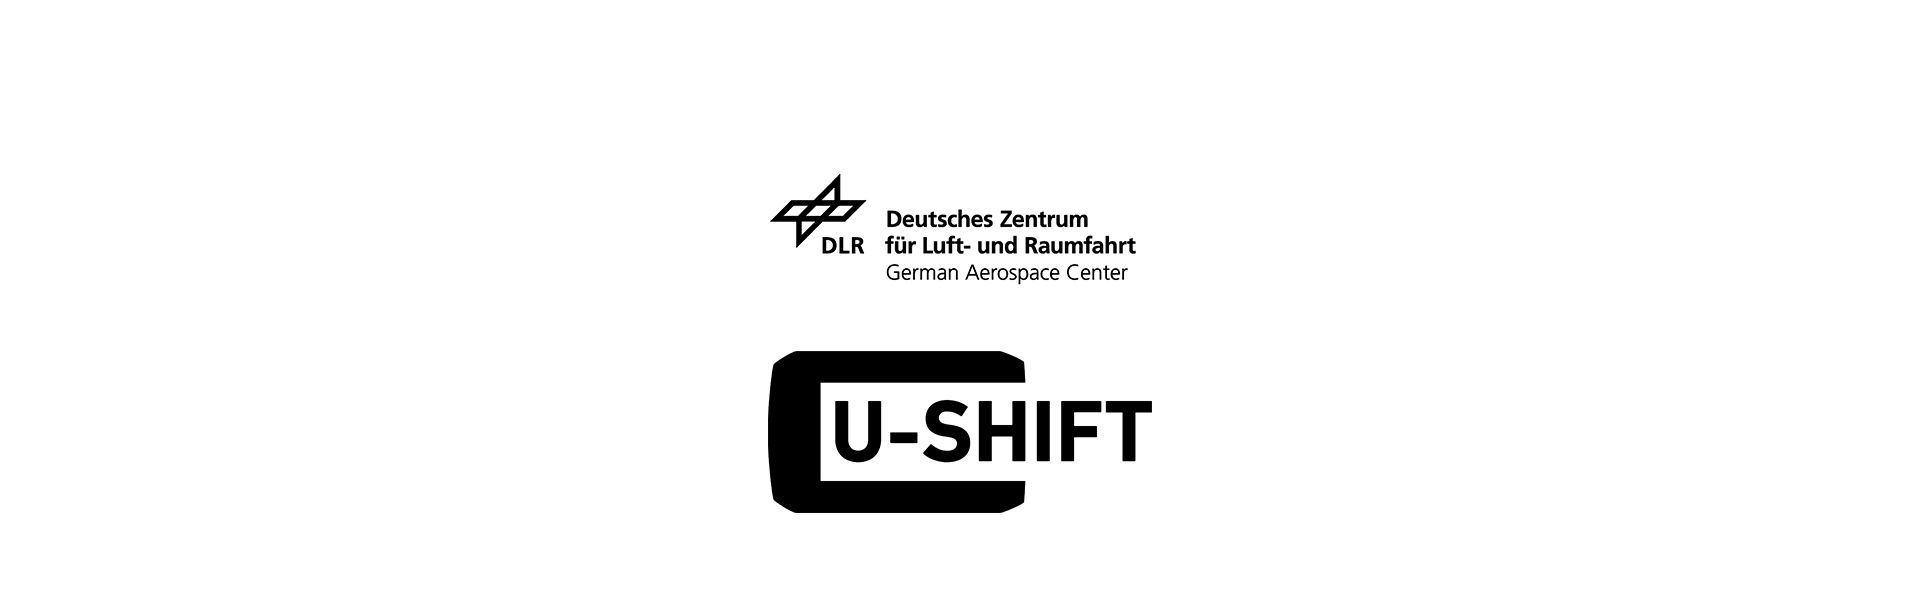 U-Shift Design Development DLR-Robert Hahn